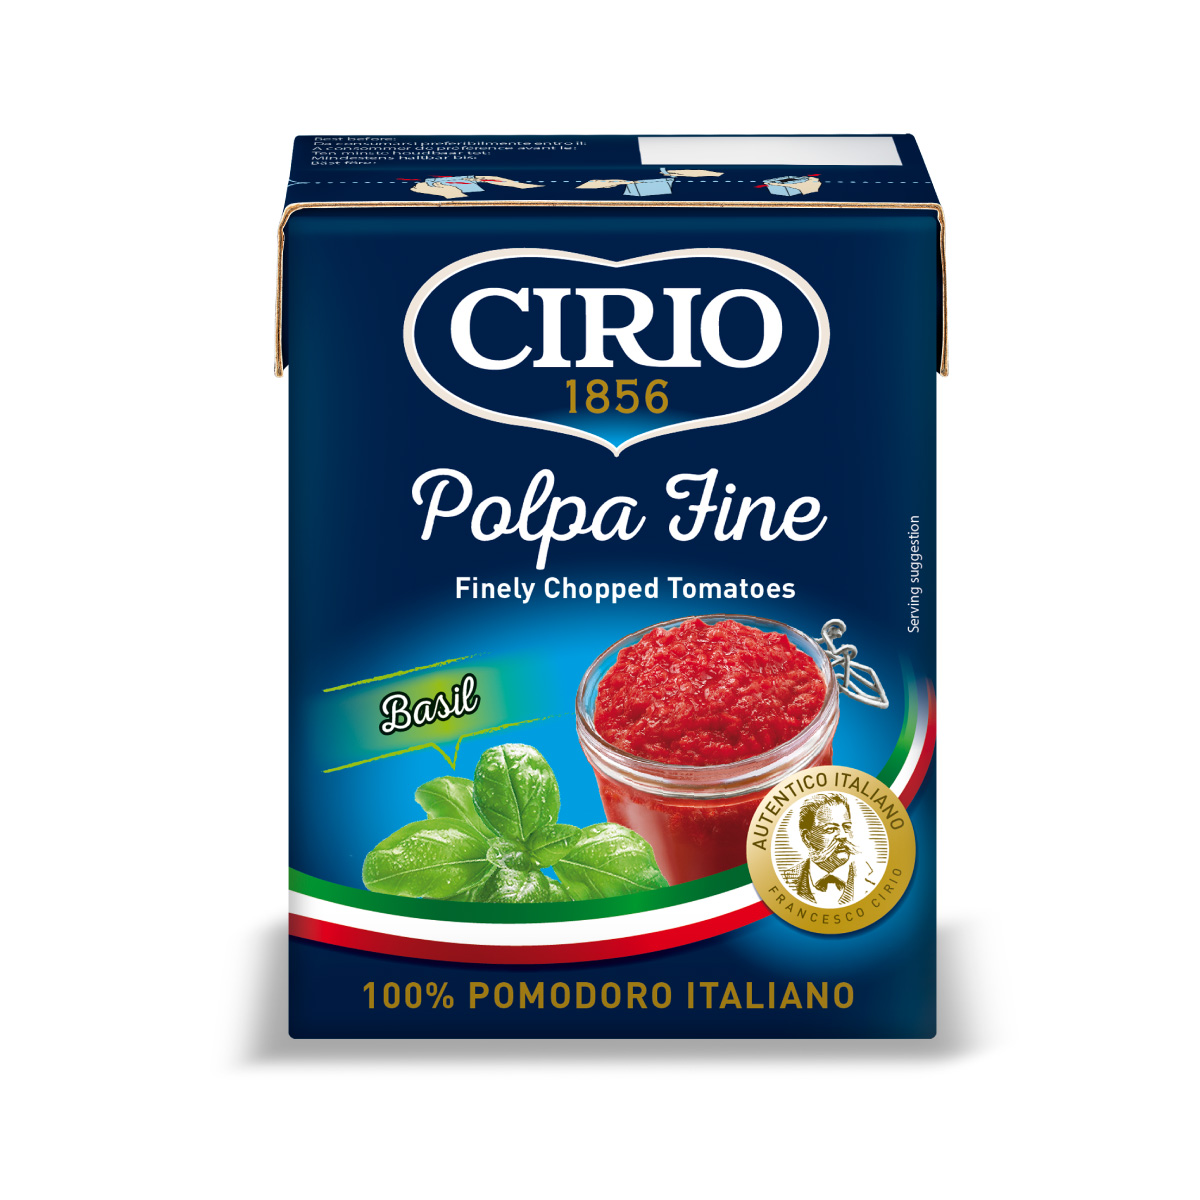 Cirio polpa fine finely chopped tomatoes and basil